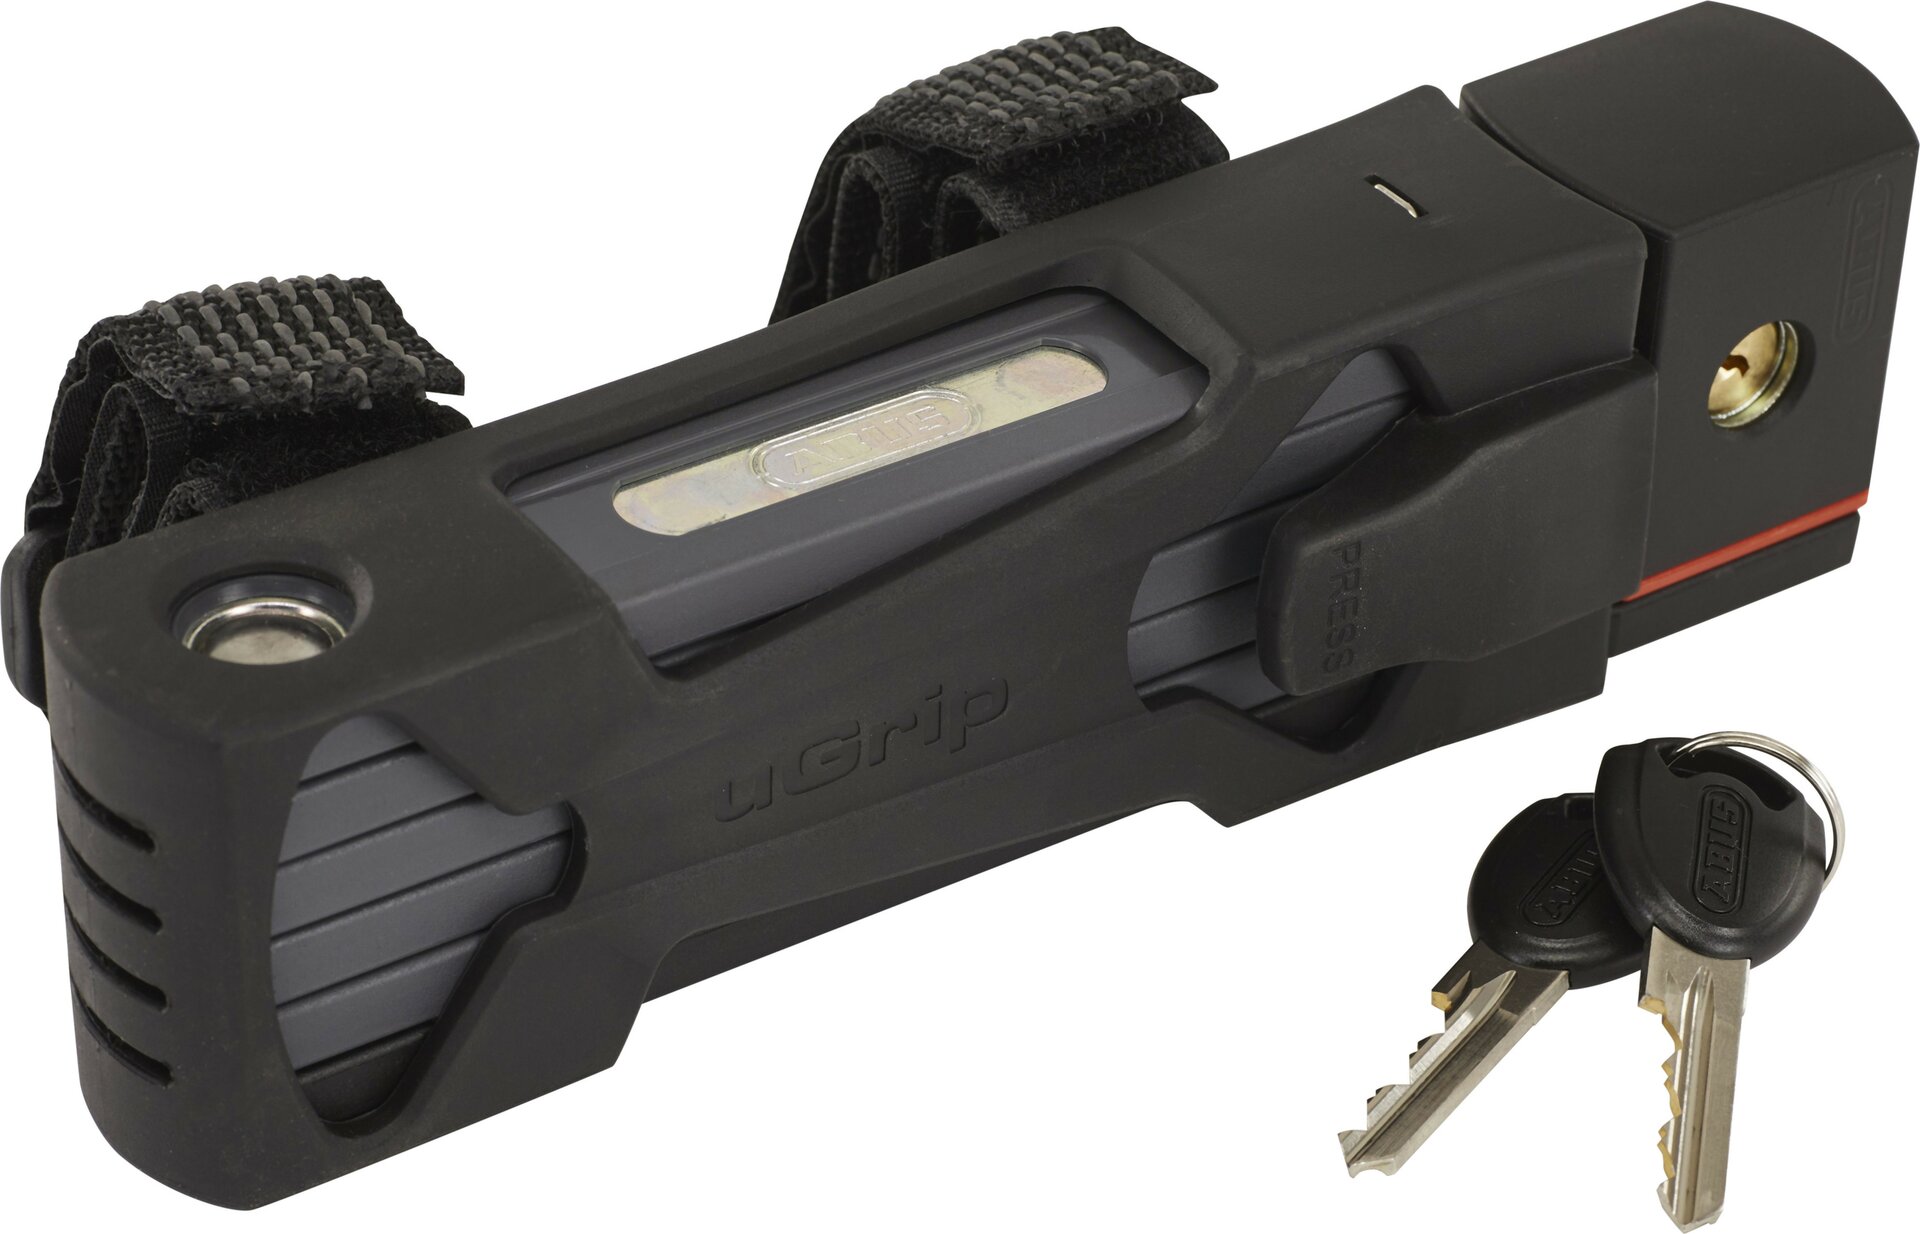 Abus uGrip Bordo 5700/80 foldable lock, Locks